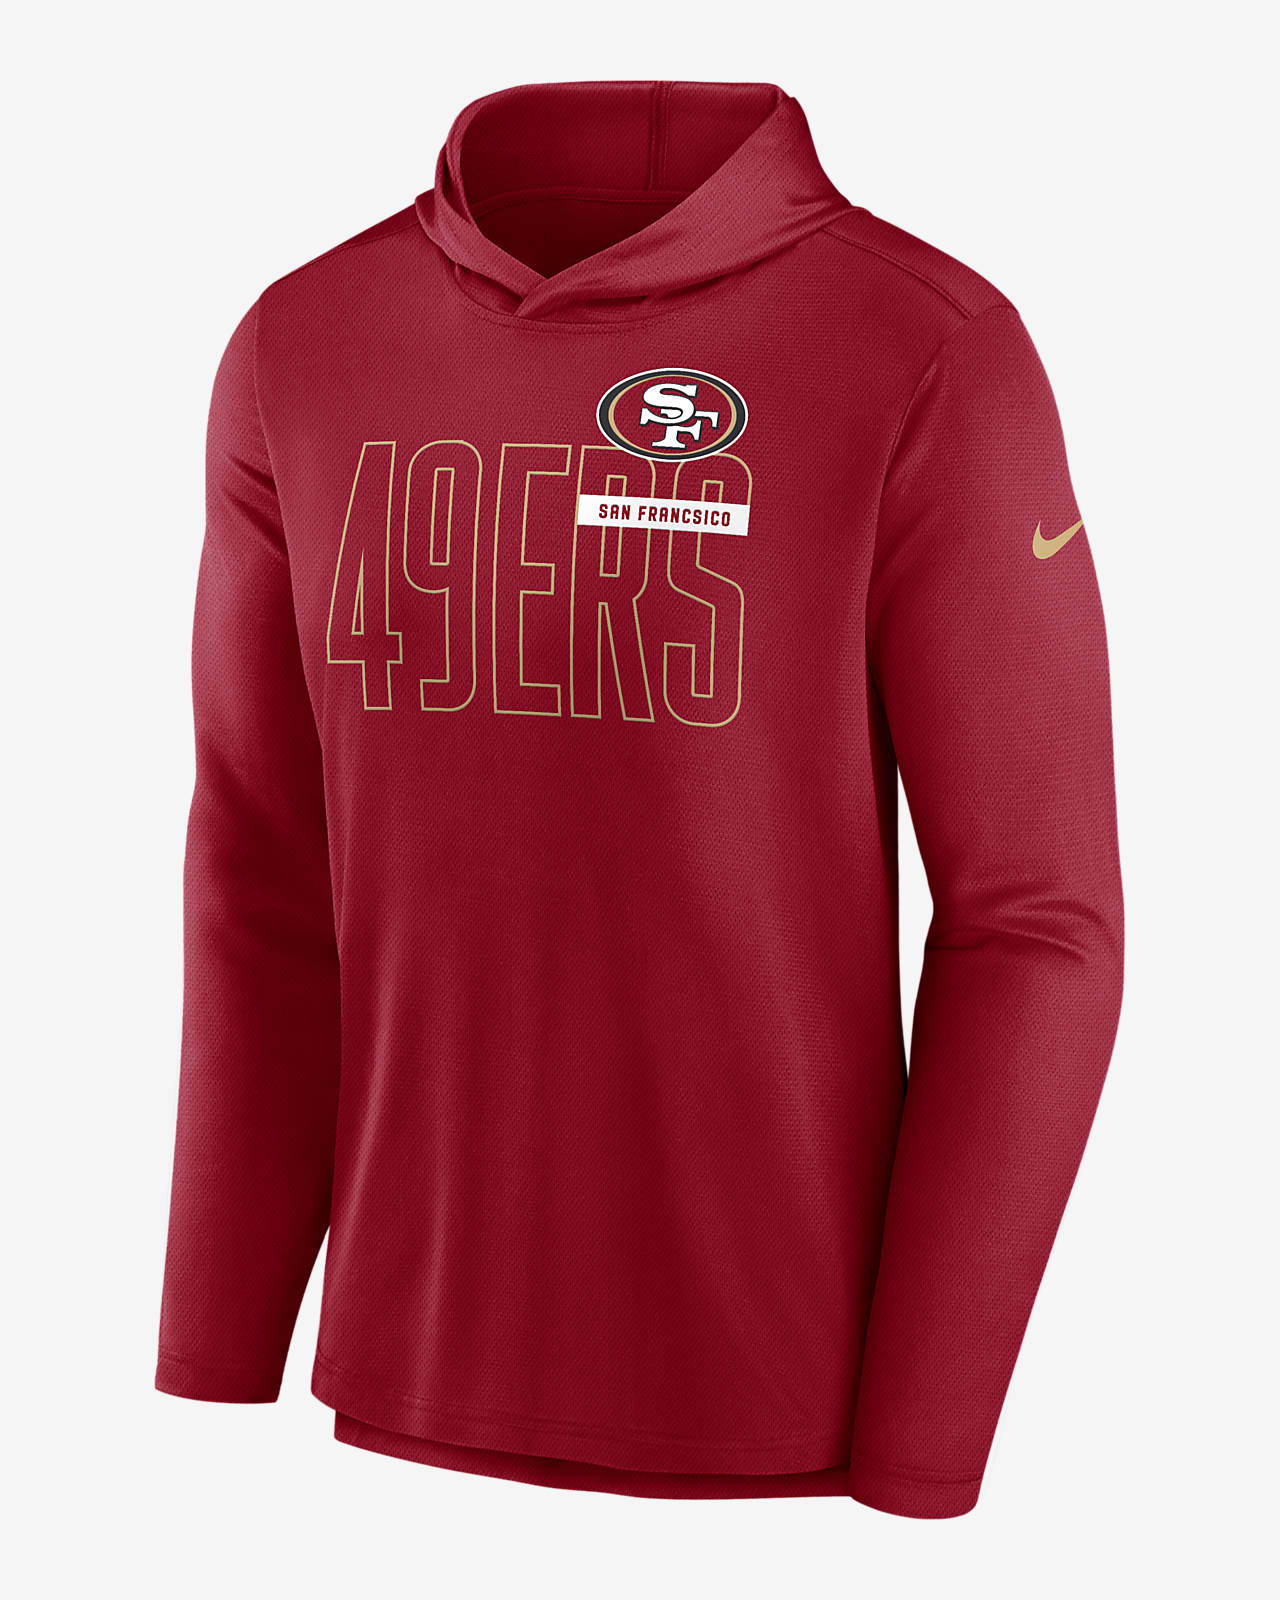 49ers faithful hoodie nike